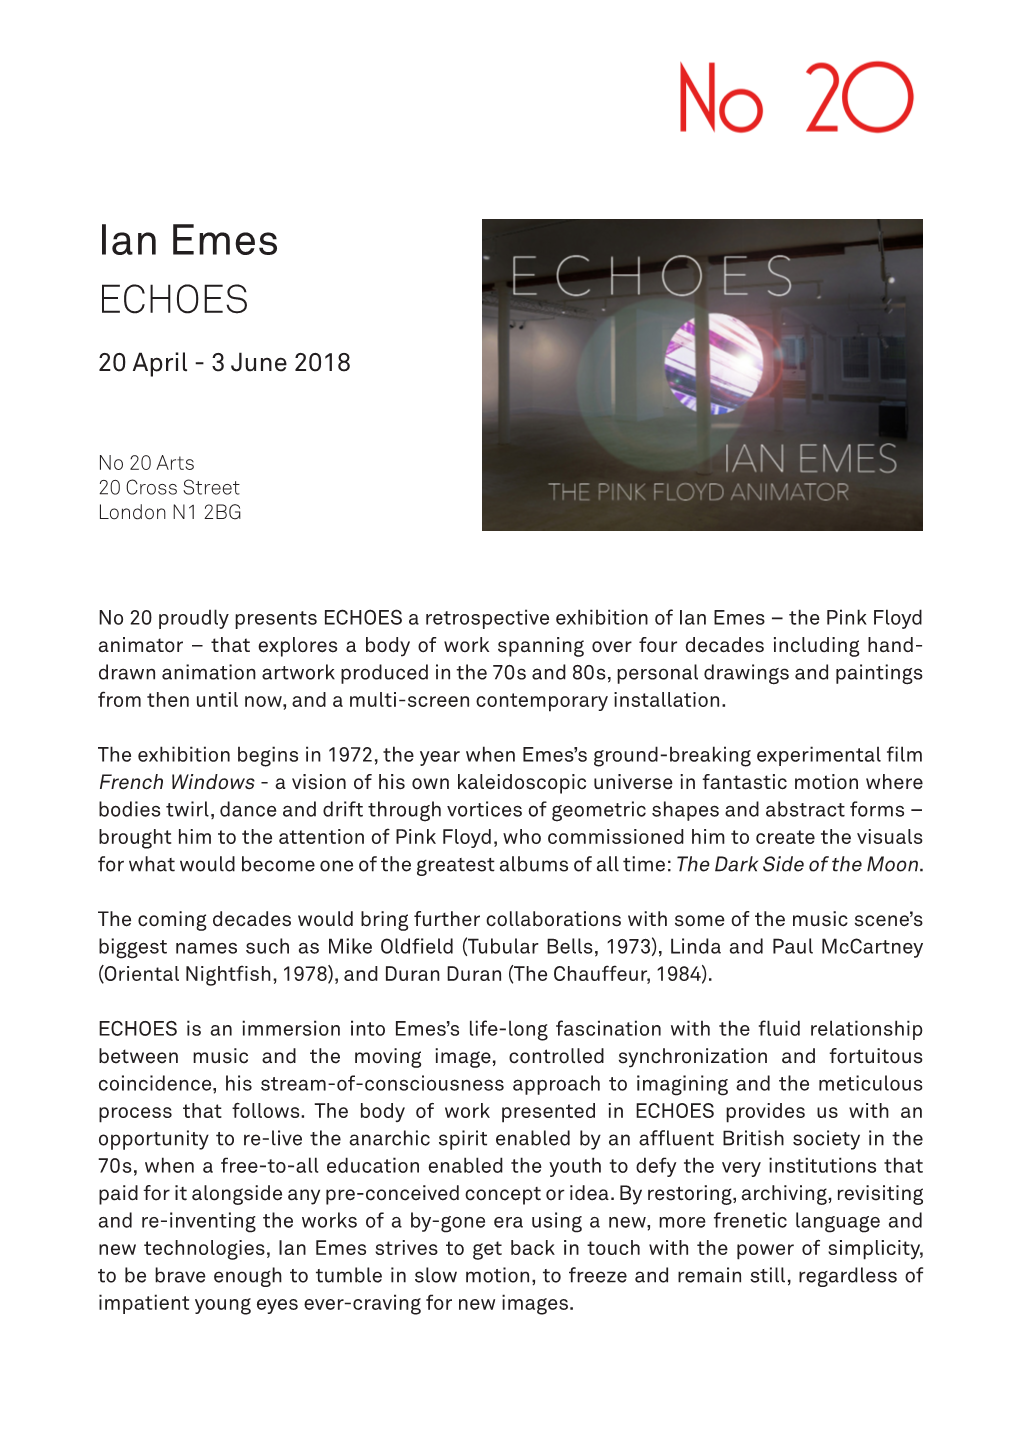 Ian Emes ECHOES